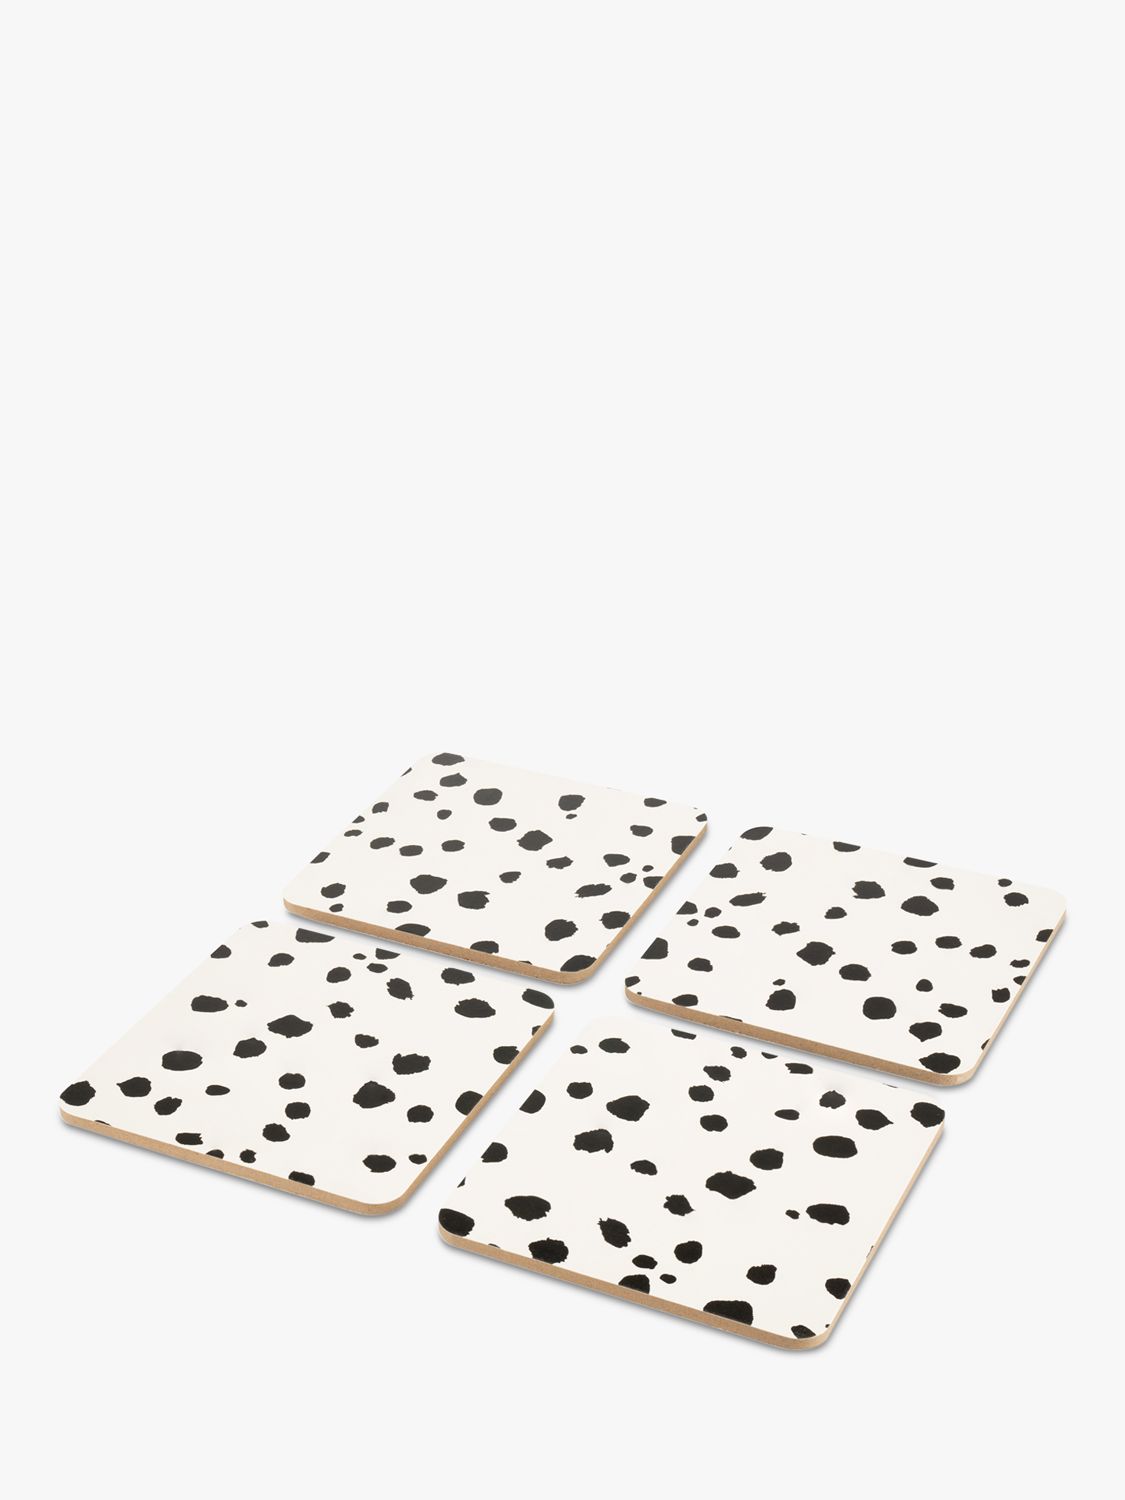 Eleanor Bowmer Dalmatian Dot Print Cork-Backed Coasters, Set of 4, Black/White